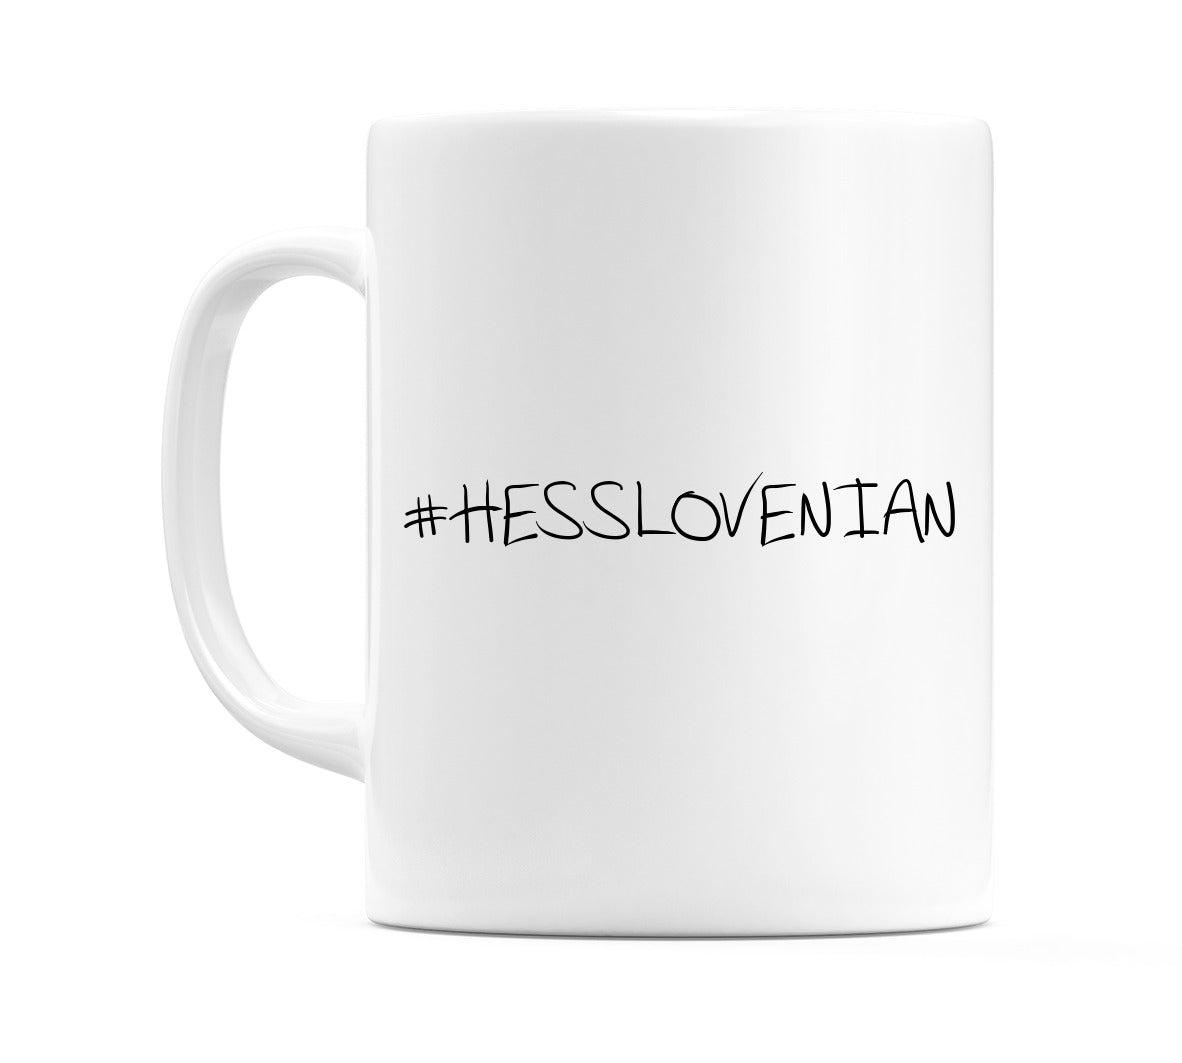 #HESSLOVENIAN Mug